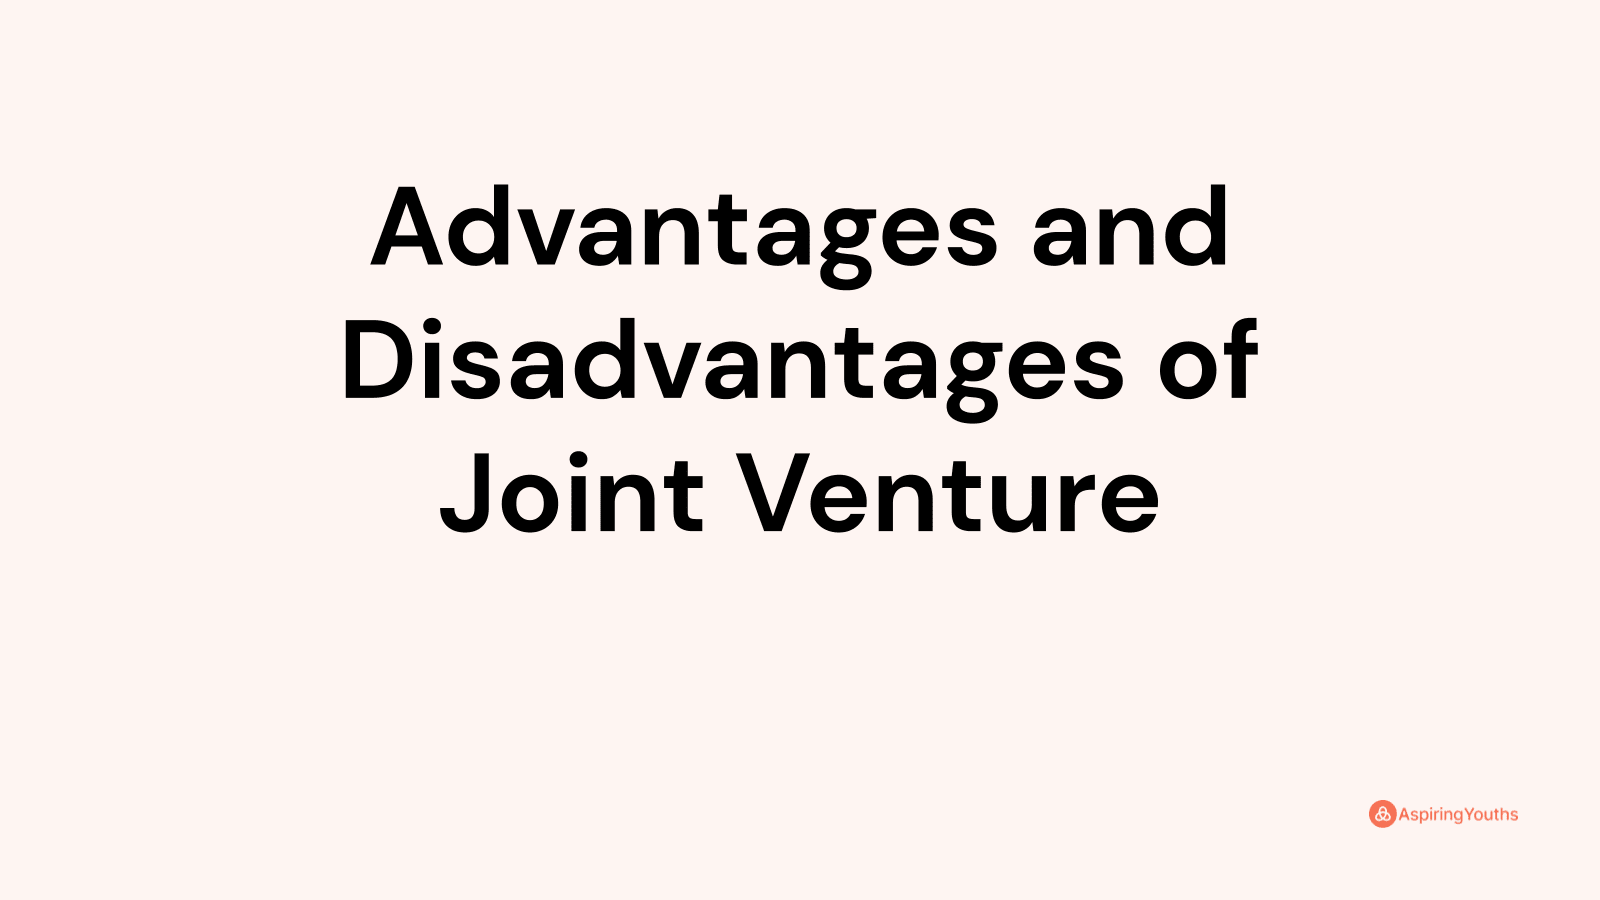 Advantages and disadvantages of Joint Venture